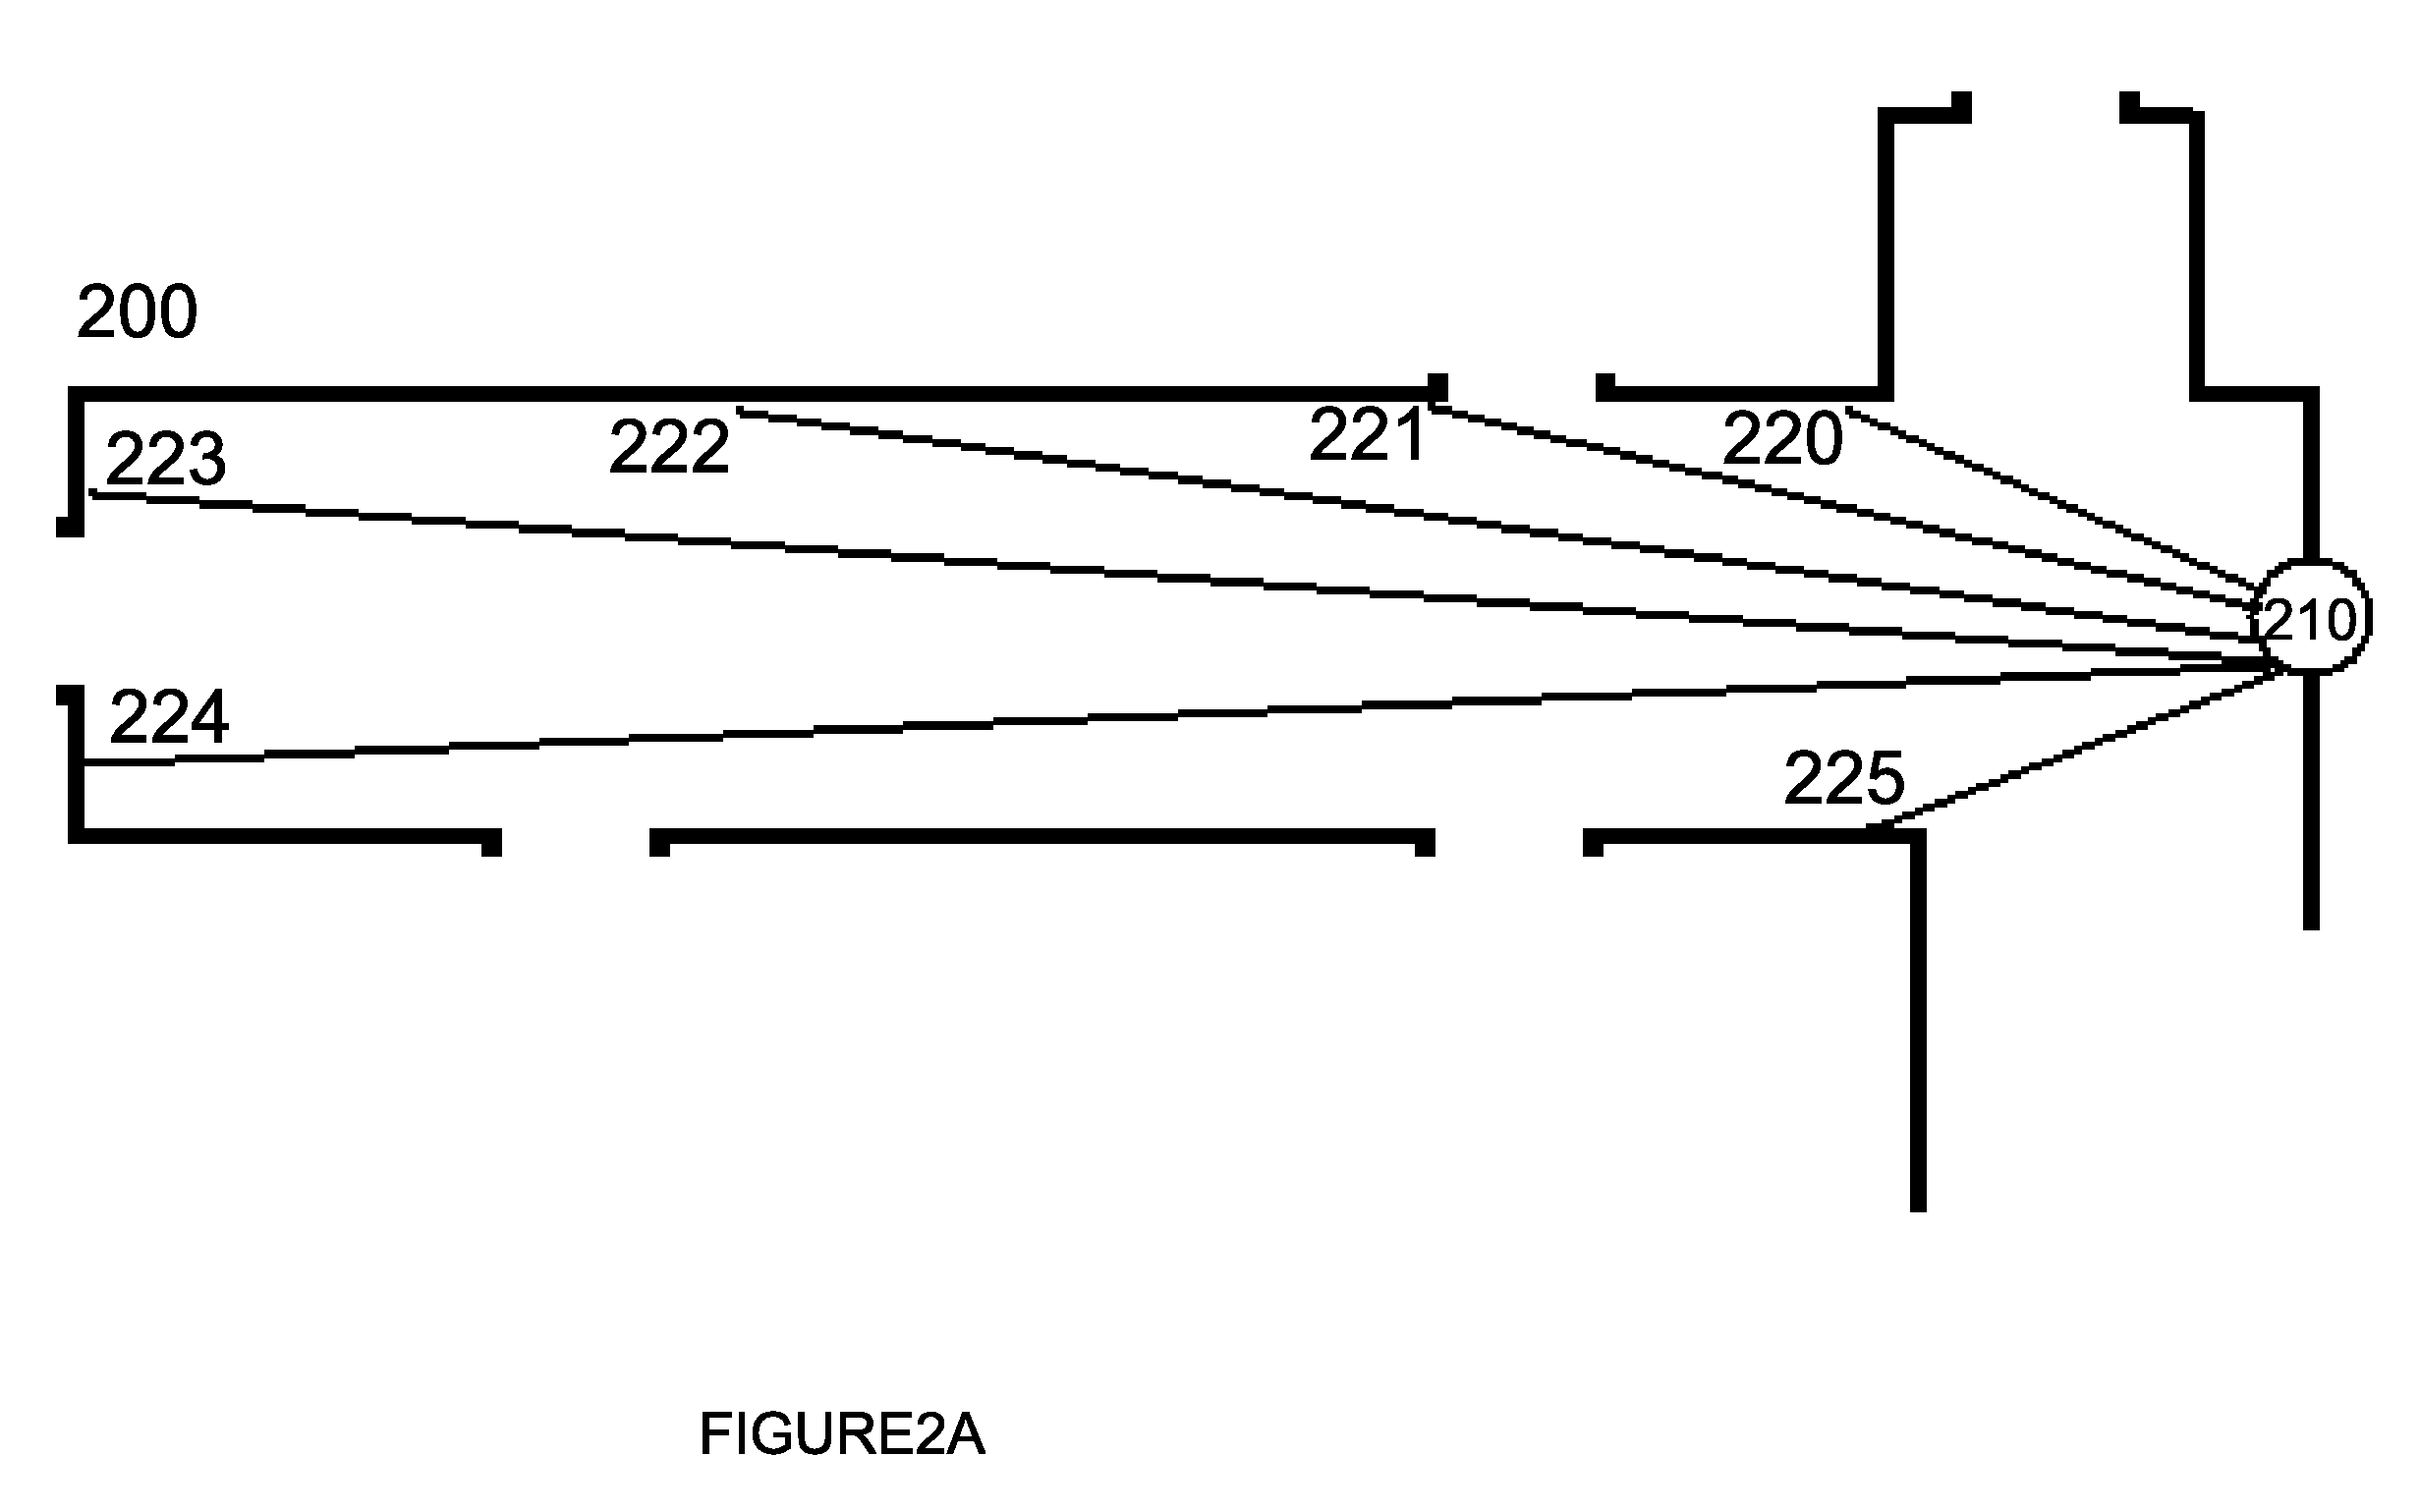 Laser lighting apparatus and method